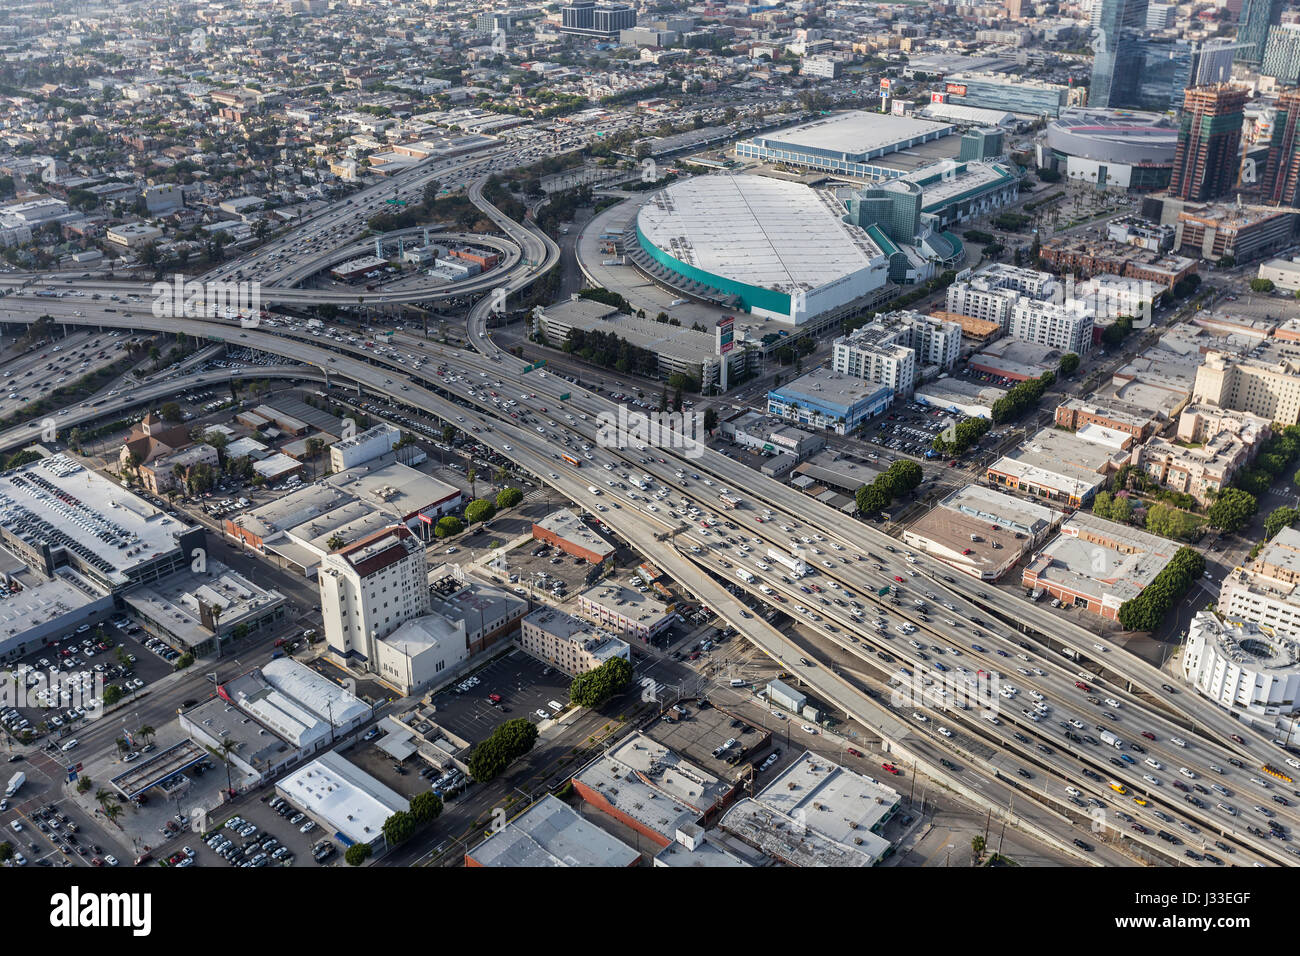 Los Angeles, California, USA - April 12, 2017:  Aerial view of Harbor 110 and Santa Monica 10 freeways interchange in downtown LA. Stock Photo